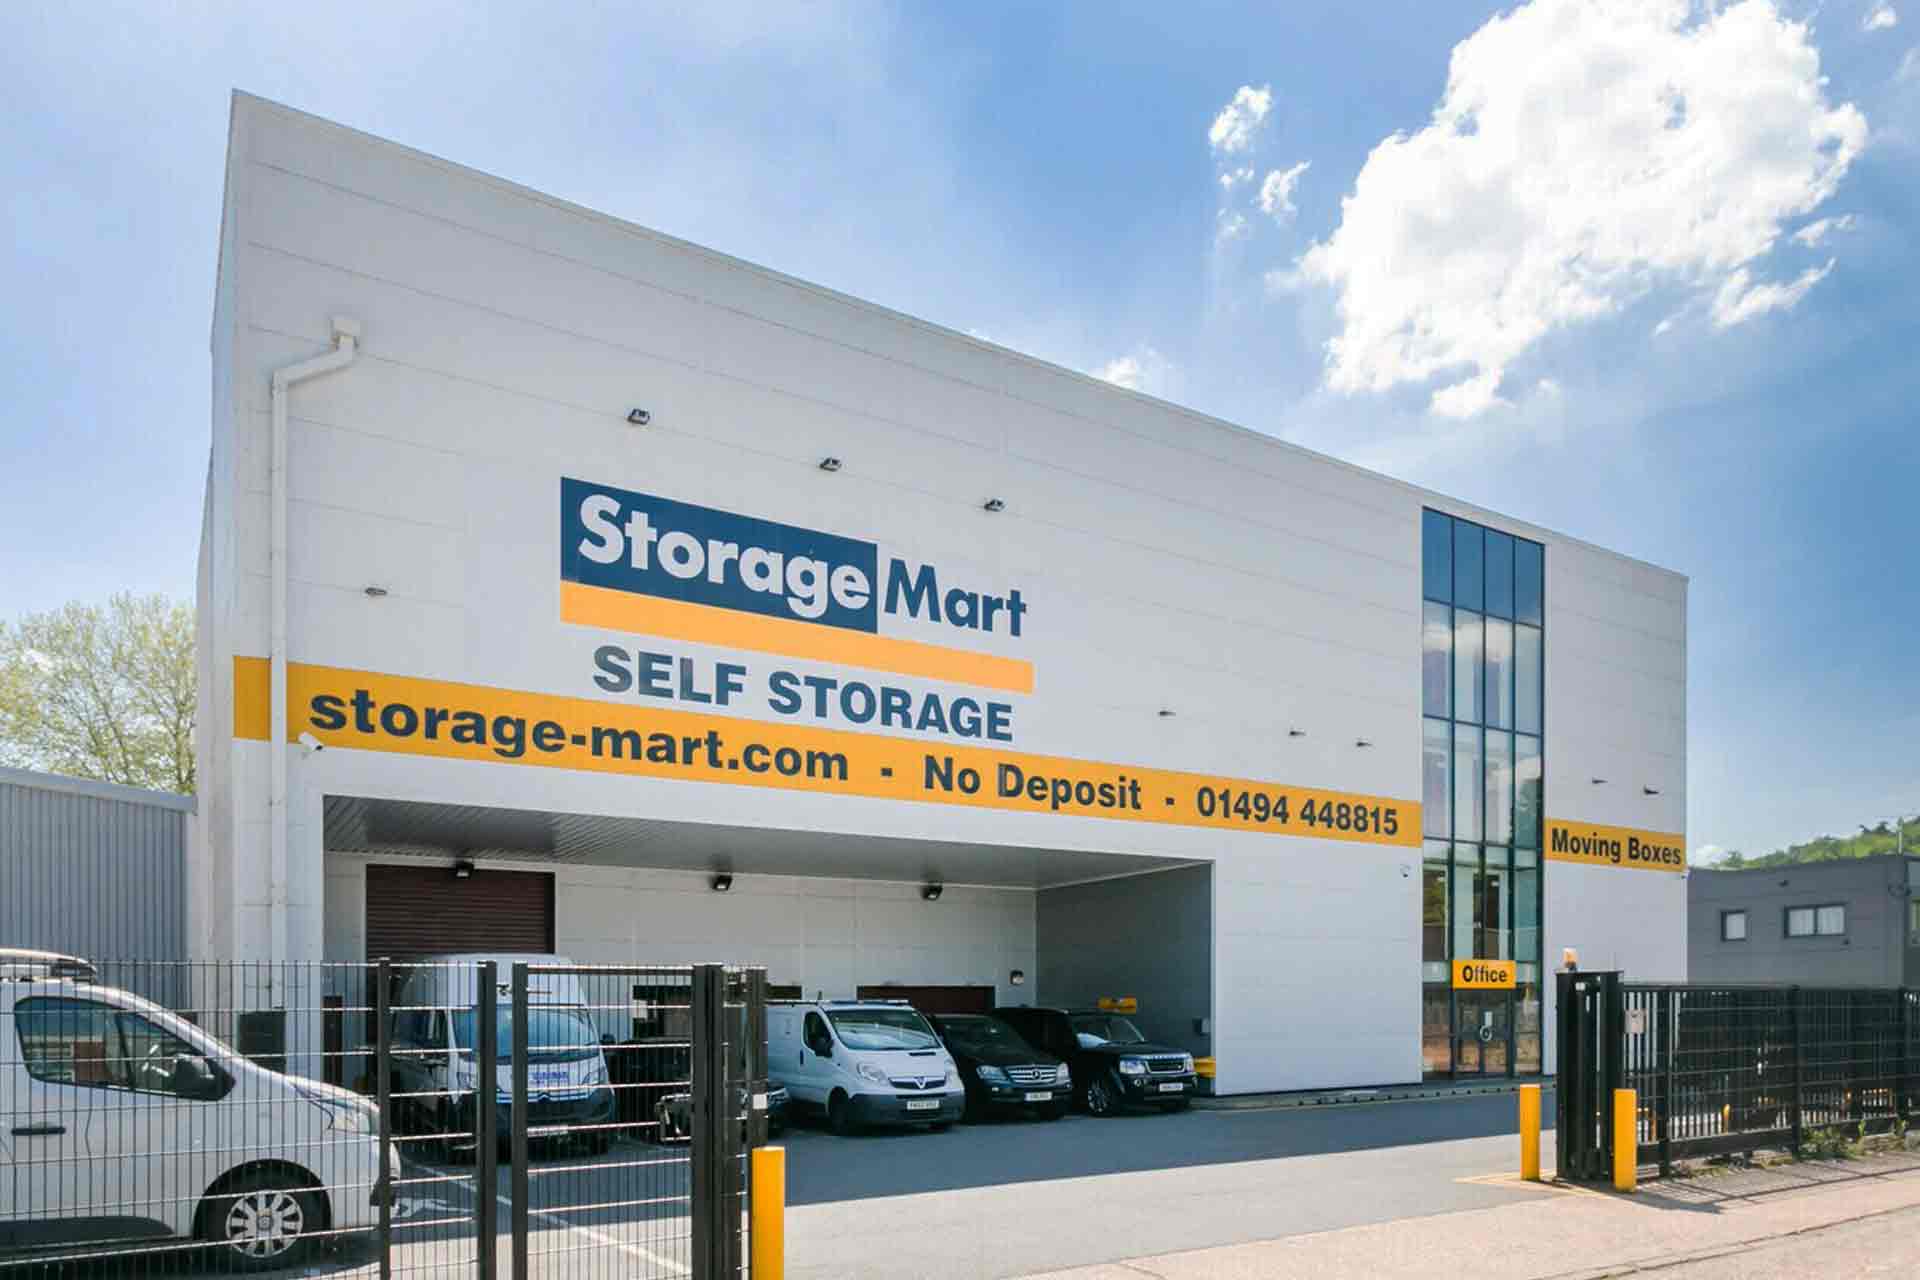 Featured image of StorageMart High Wycombe.